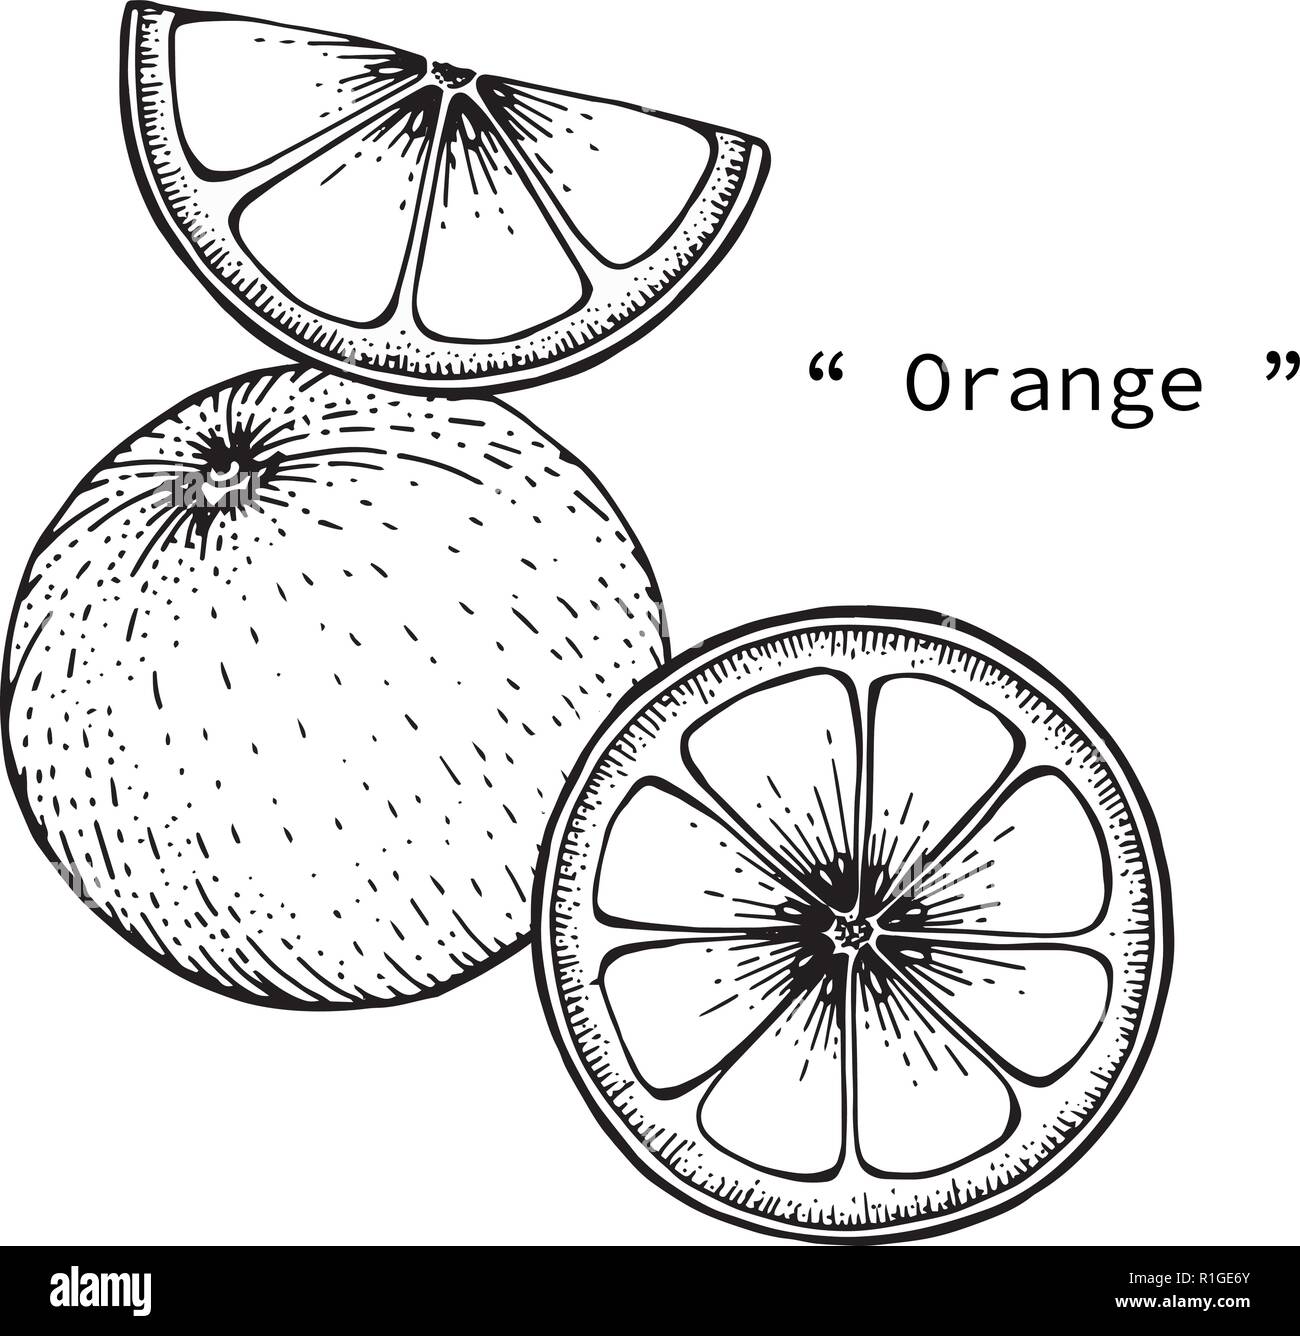 Sketch illustration of orange Stock Vector by Kopirin 68545017